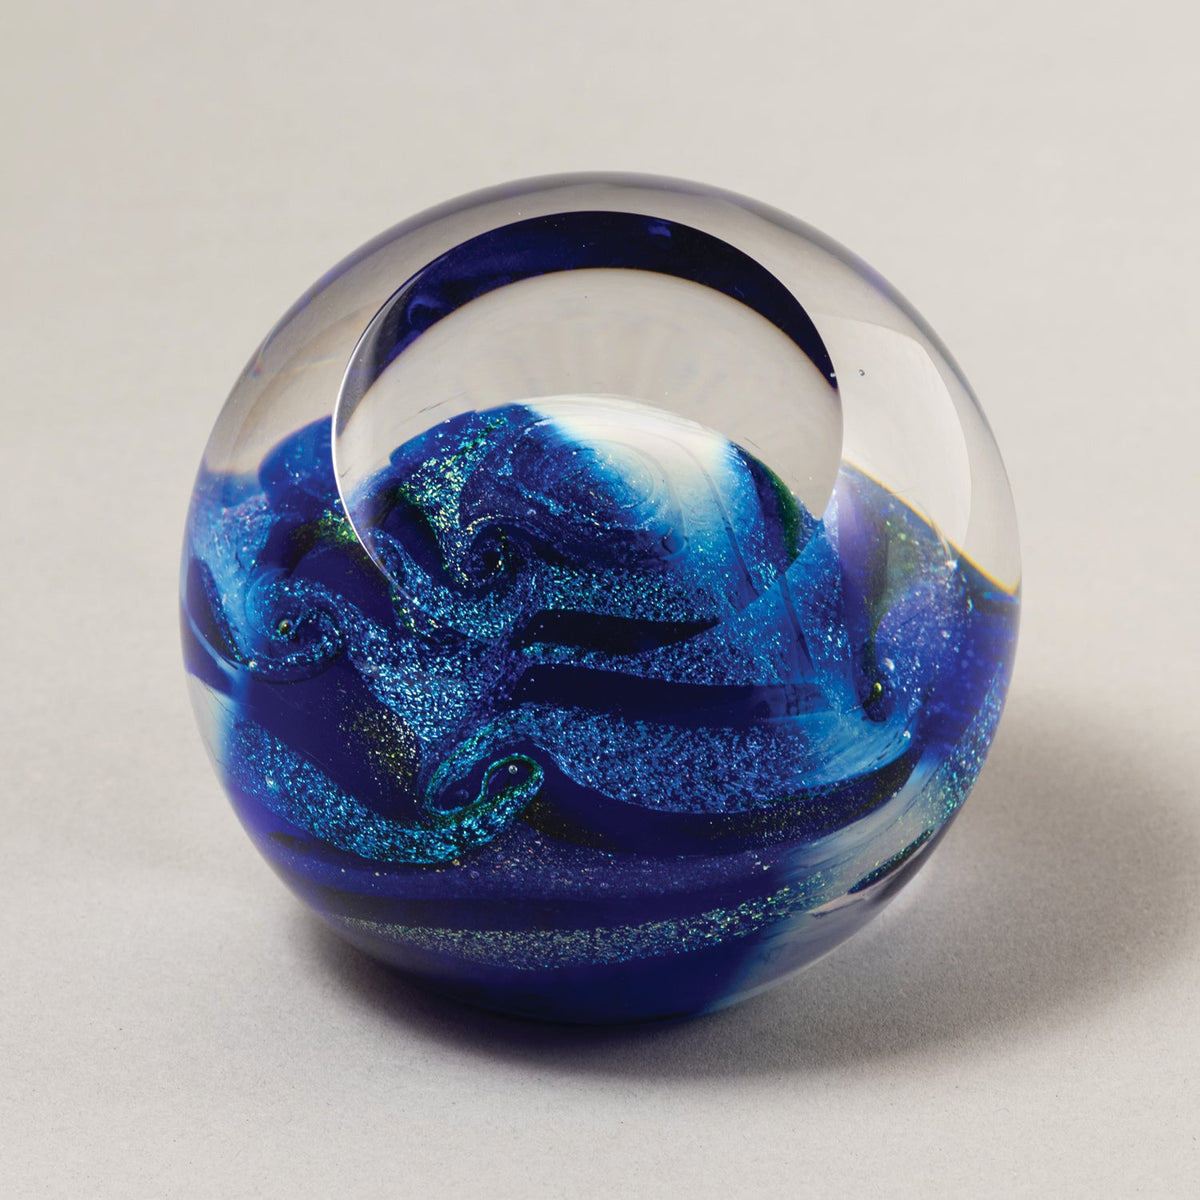 Celestial Blue Planet Handblown Glass Paperweight by Glass Eye Studio